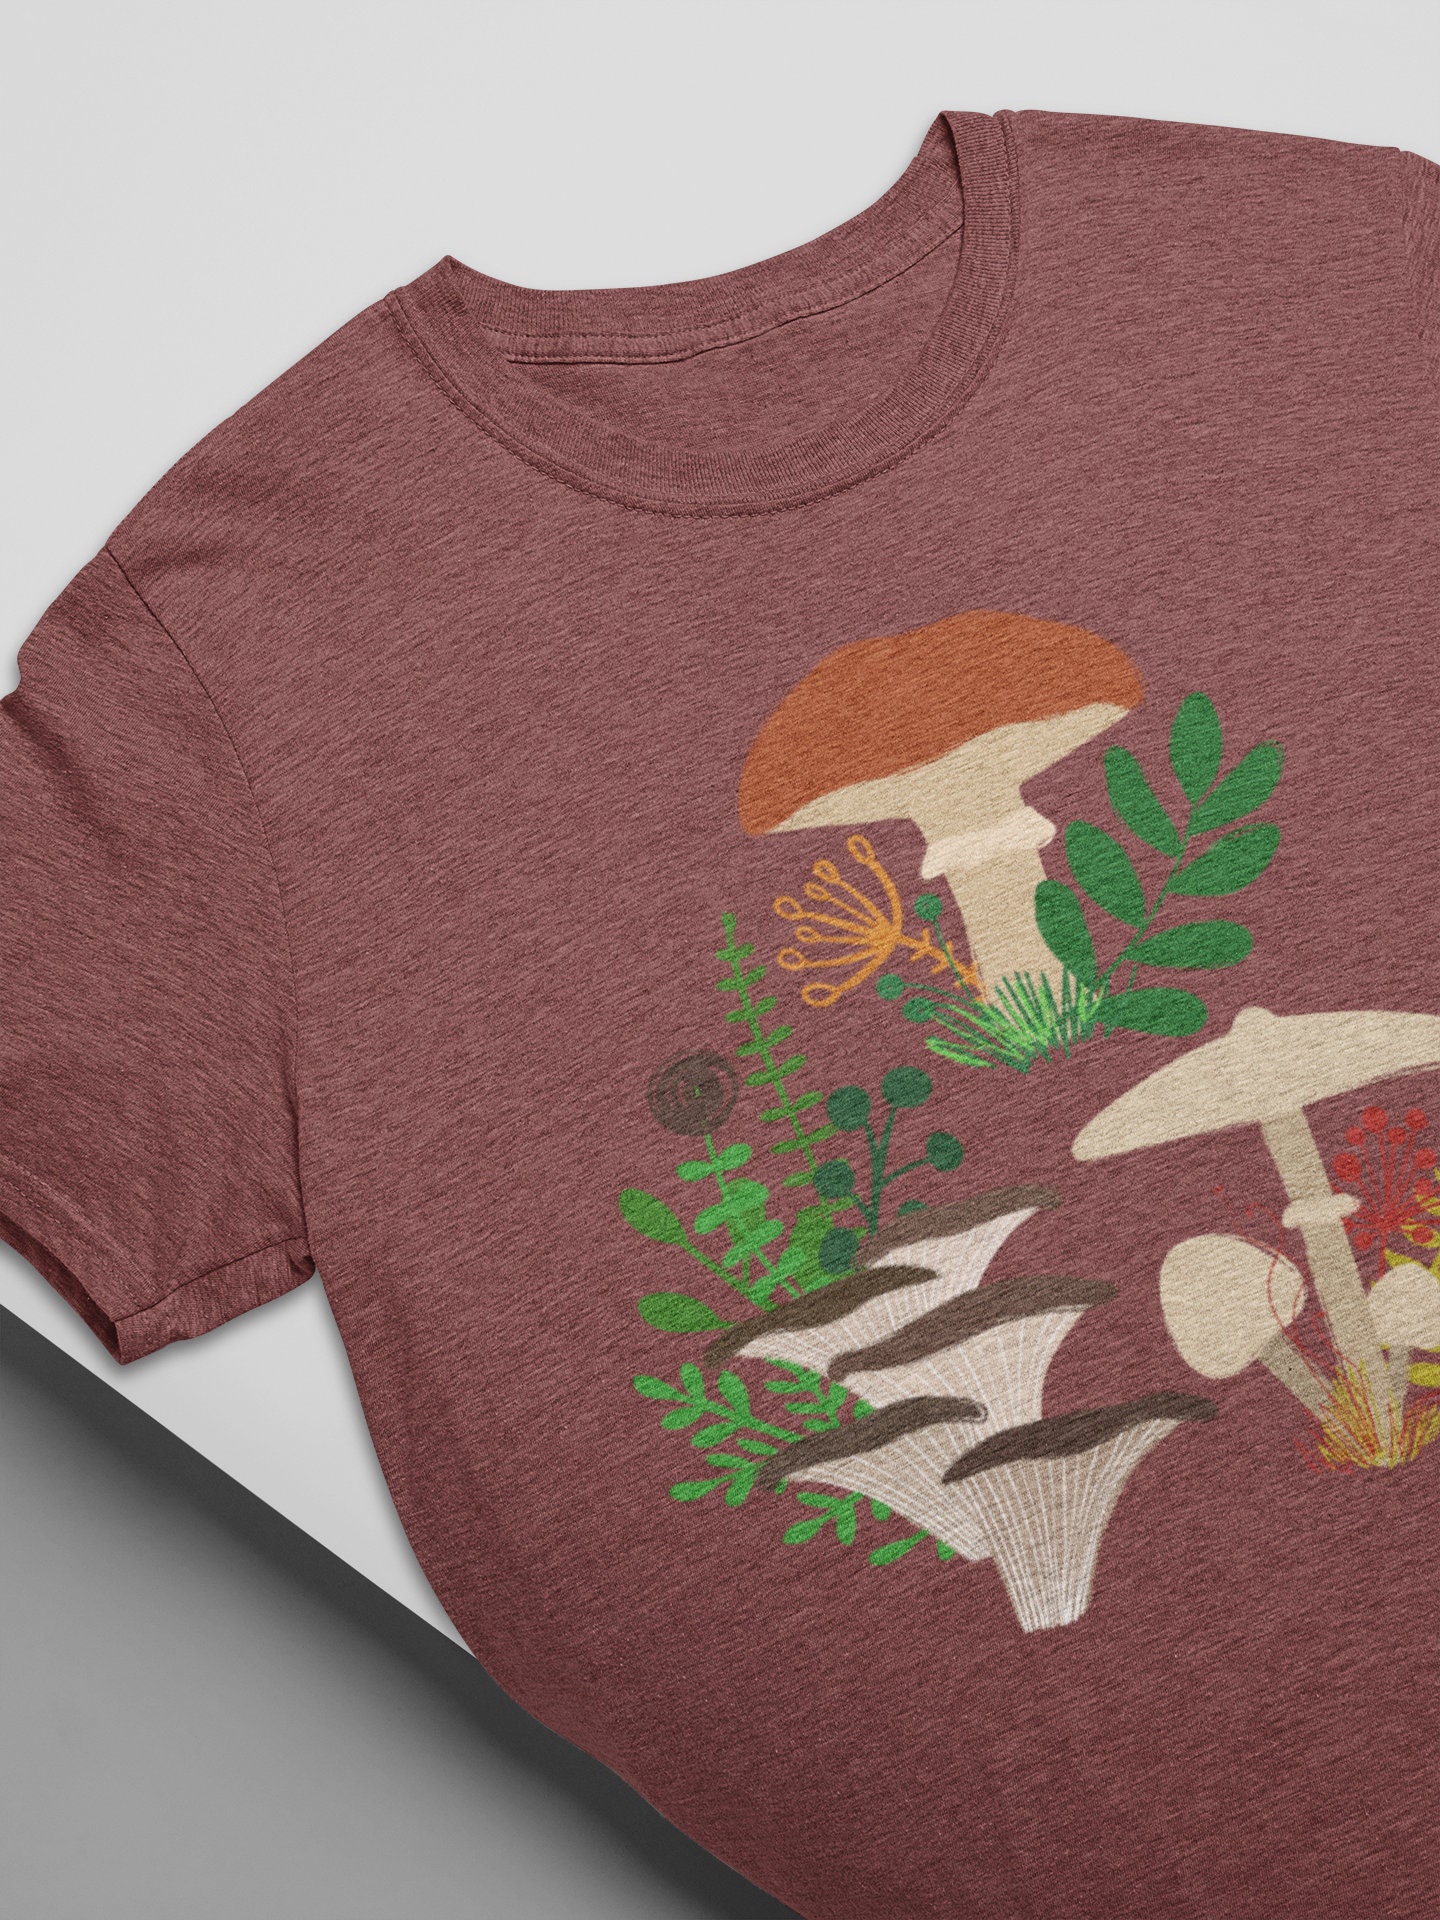 Mushroom Shirt Aesthetic Clothing Camping Shirt Plant Shirt | Etsy